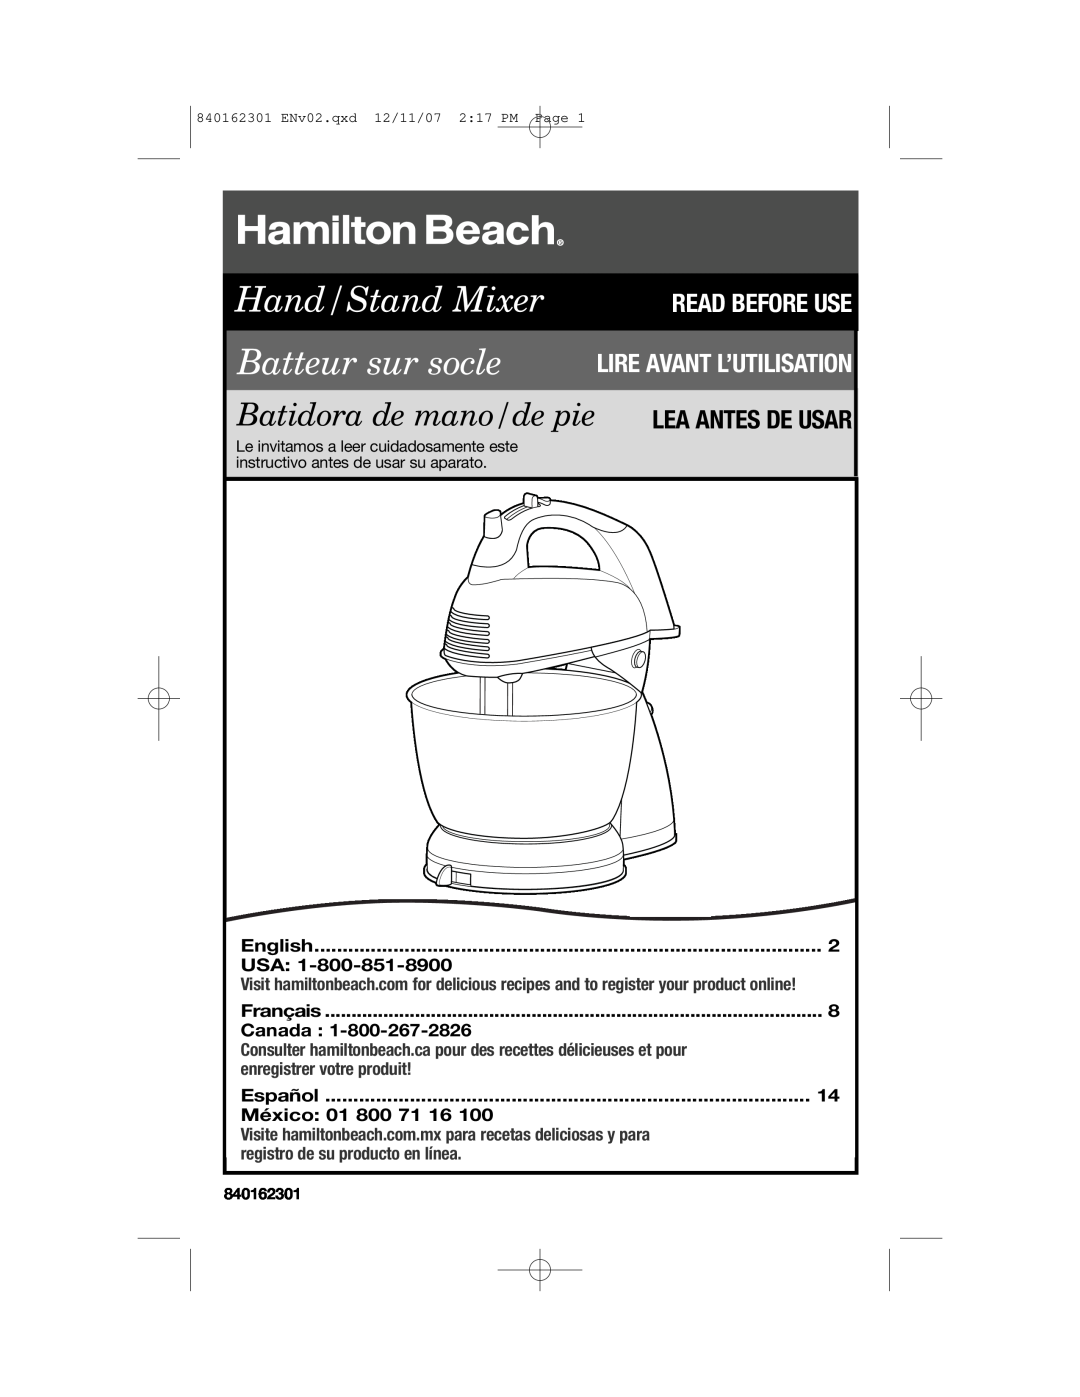 Hamilton Beach Hand/Stand Mixer manual Lea Antes De Usar, English, Français, Canada, Español, México 